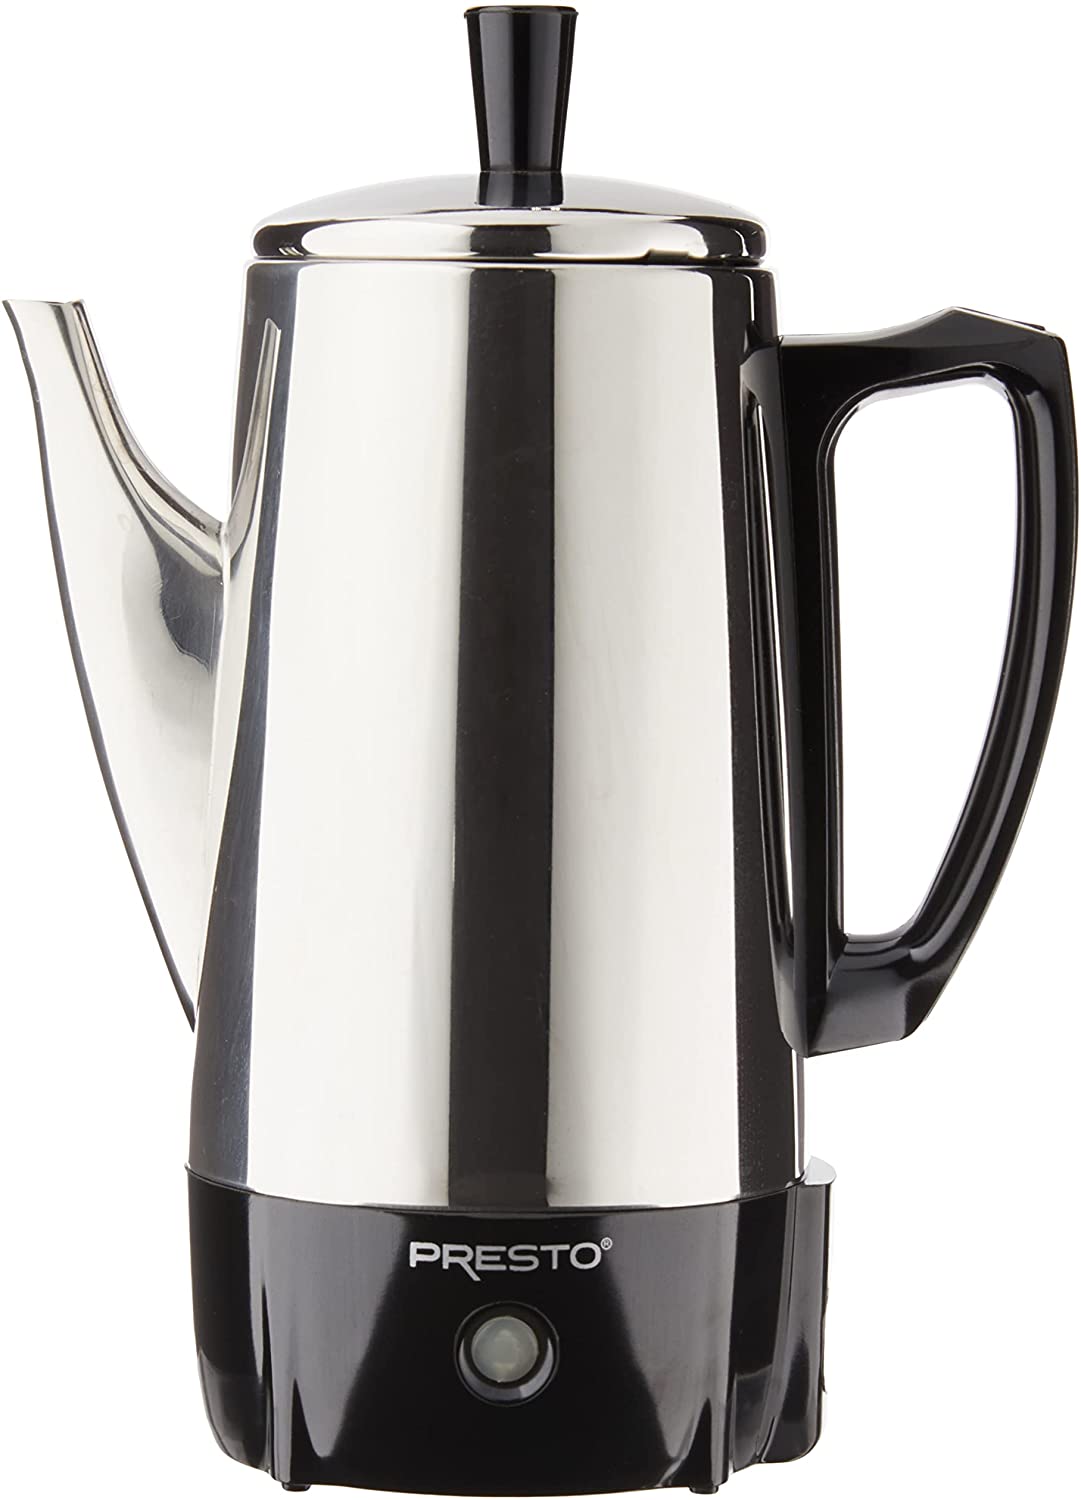 Presto-Stainless-Steel-Coffee-Percolator